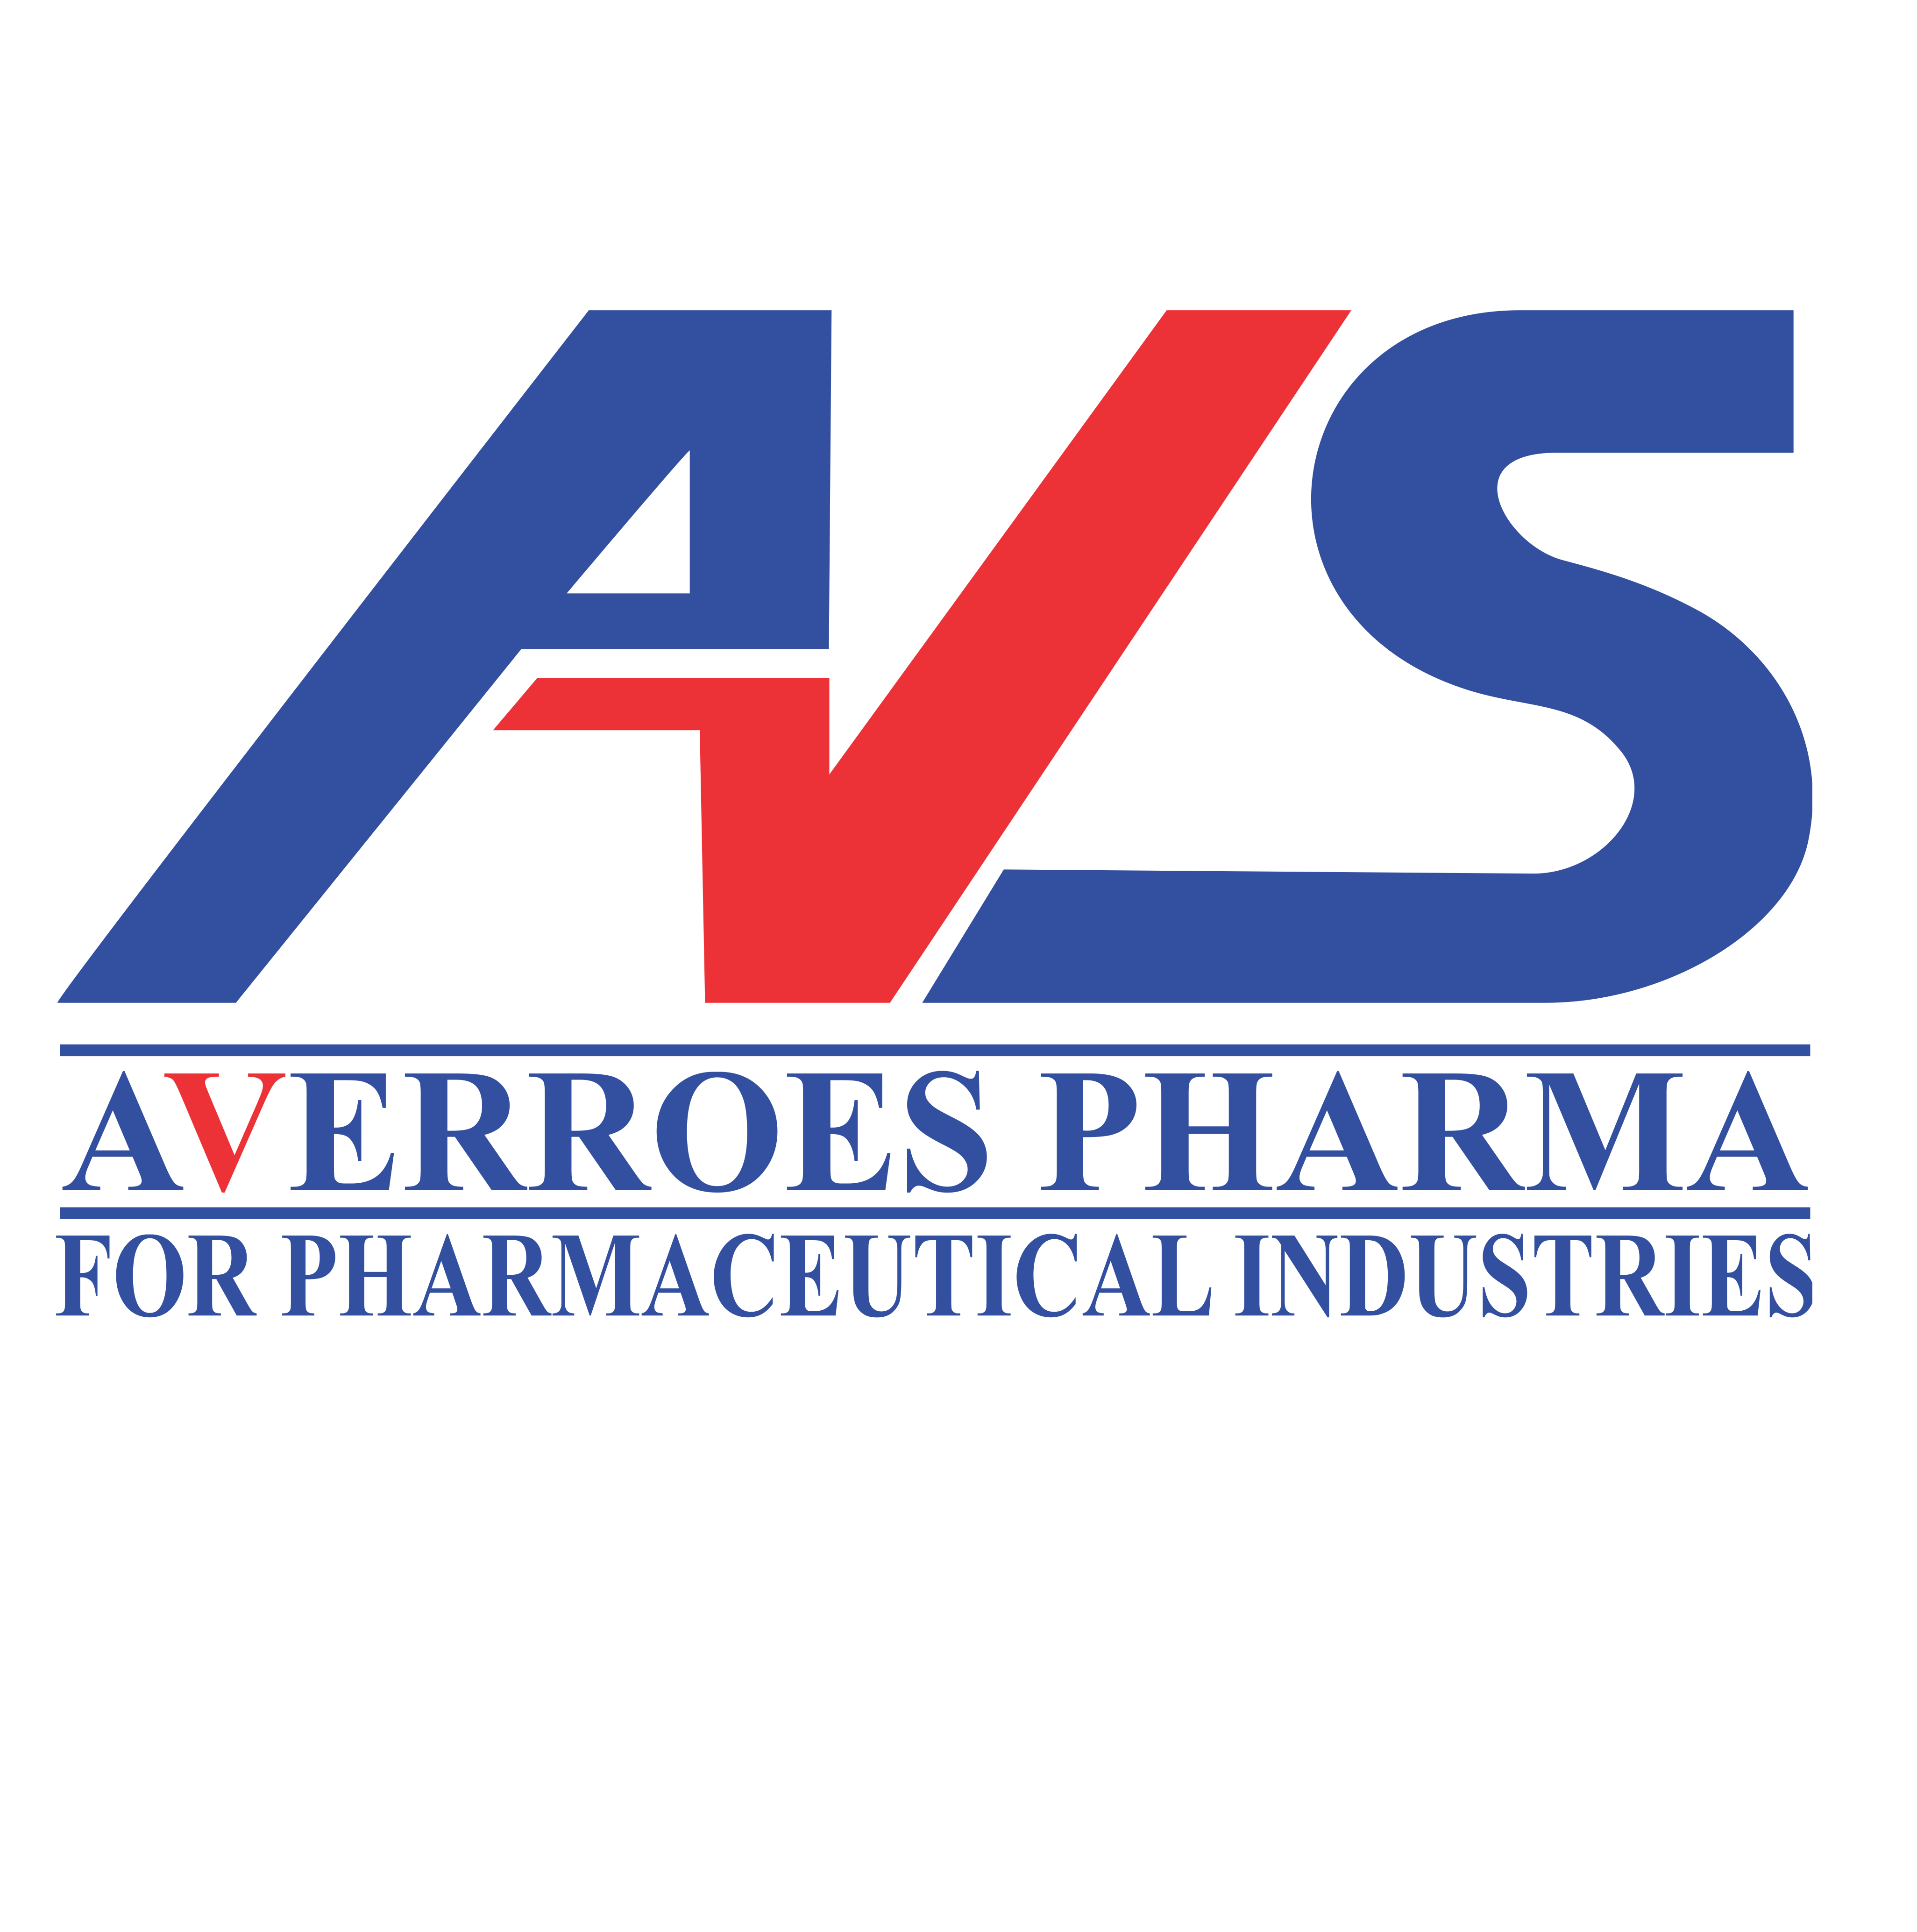 Averroes pharma